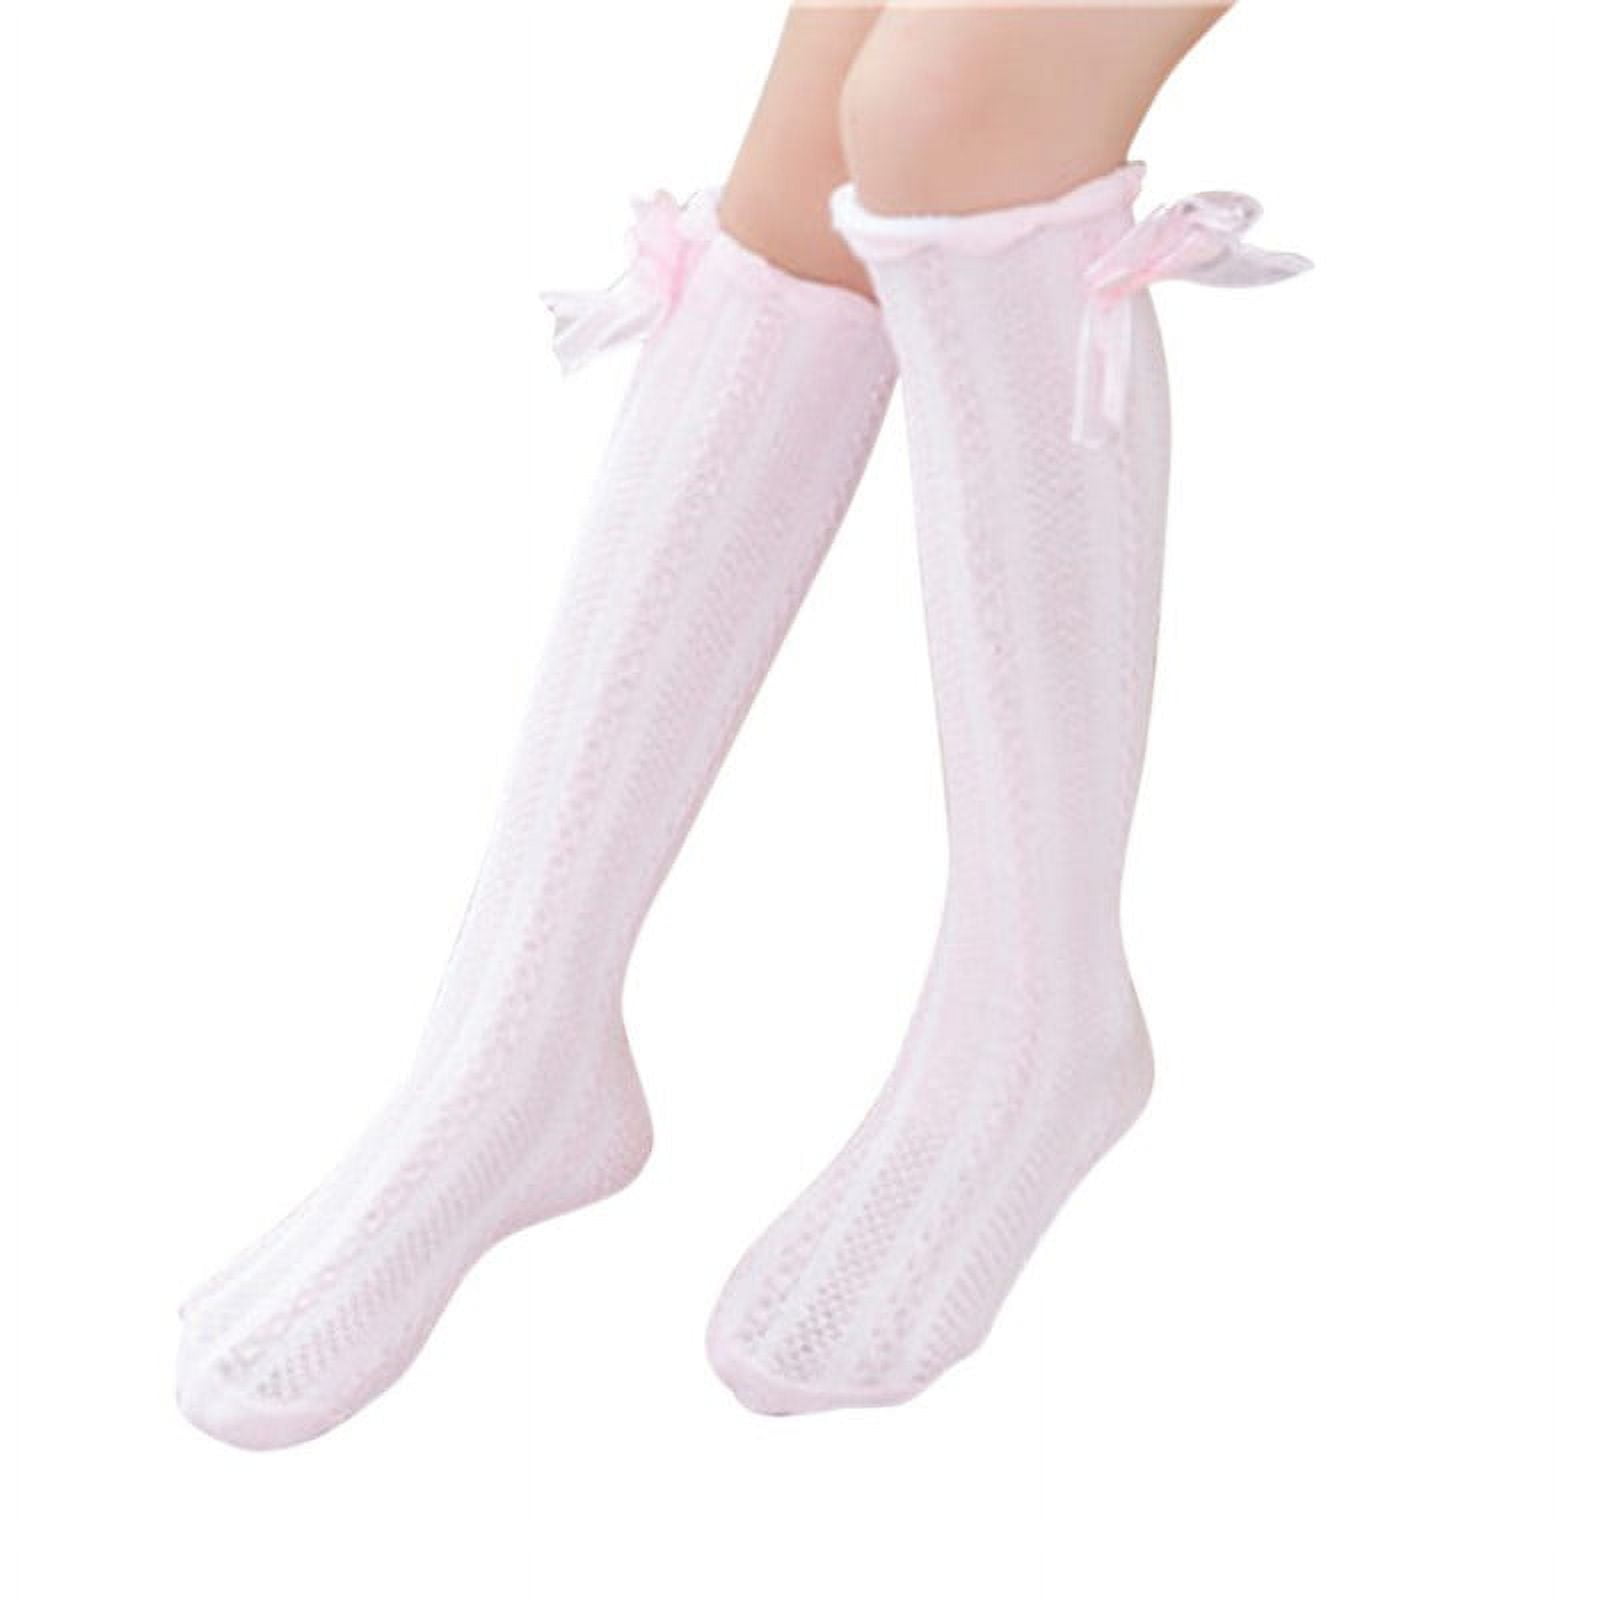 cherie ervin share knee high frilly socks photos